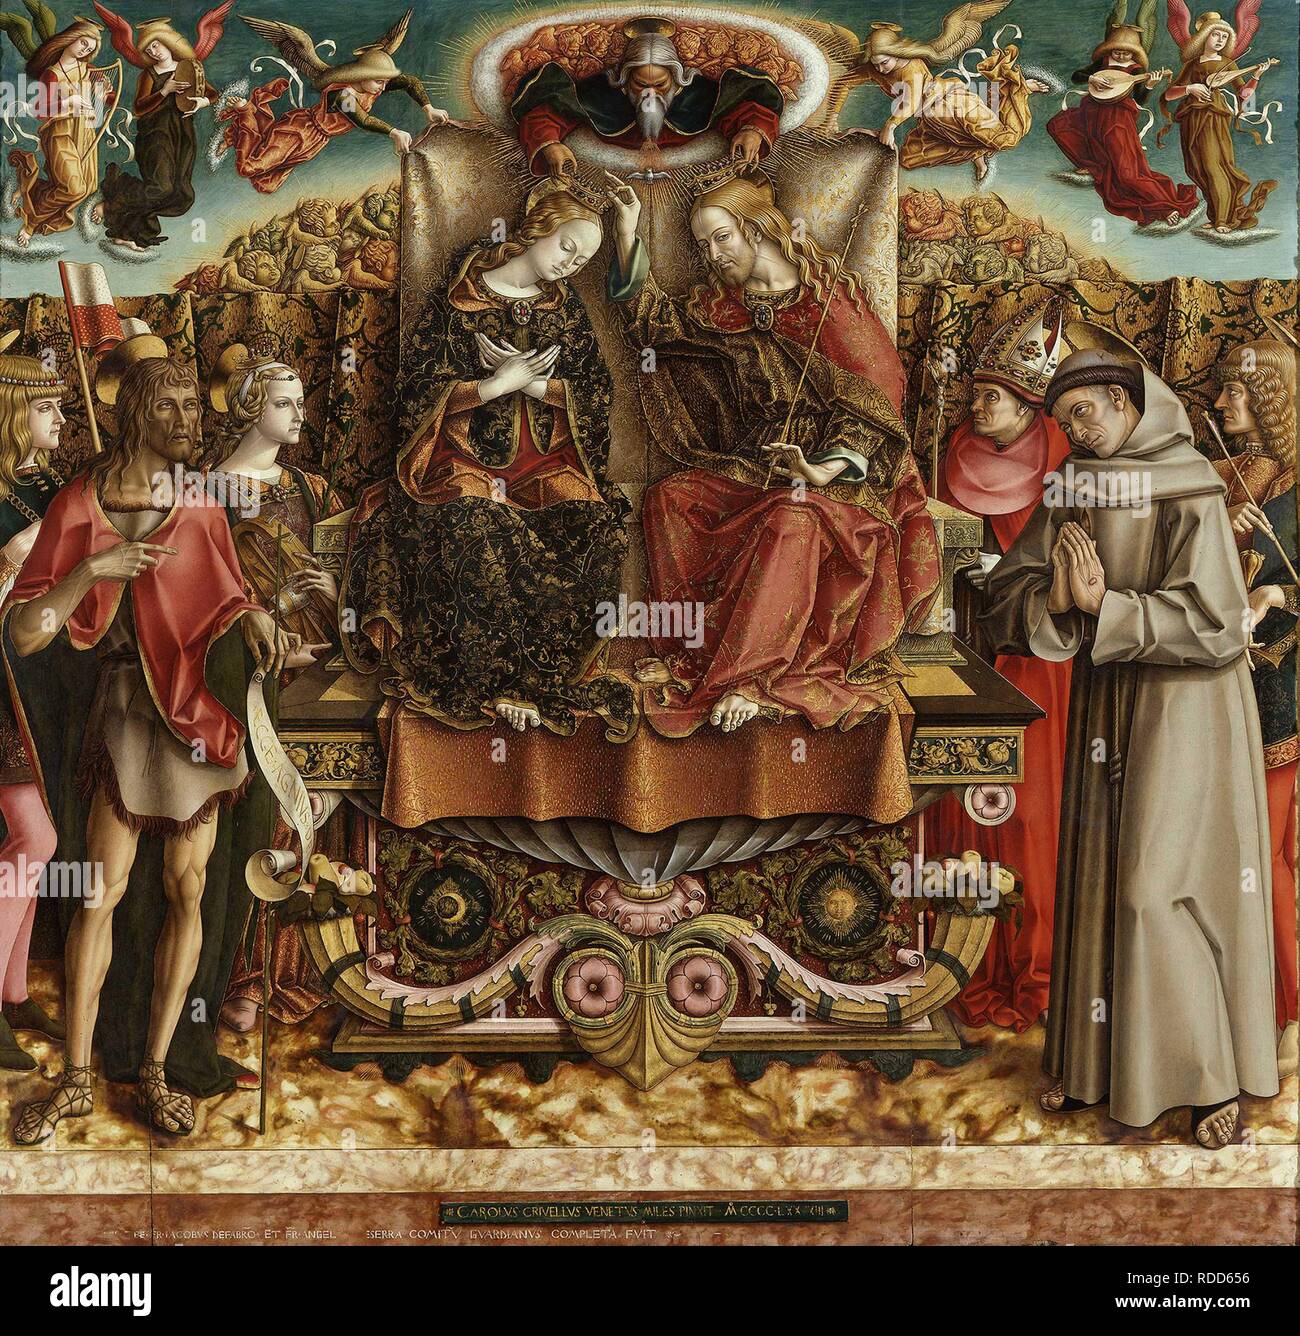 The Coronation of the Virgin. Museum: Pinacoteca di Brera, Milan. Author: CRIVELLI, CARLO. Stock Photo